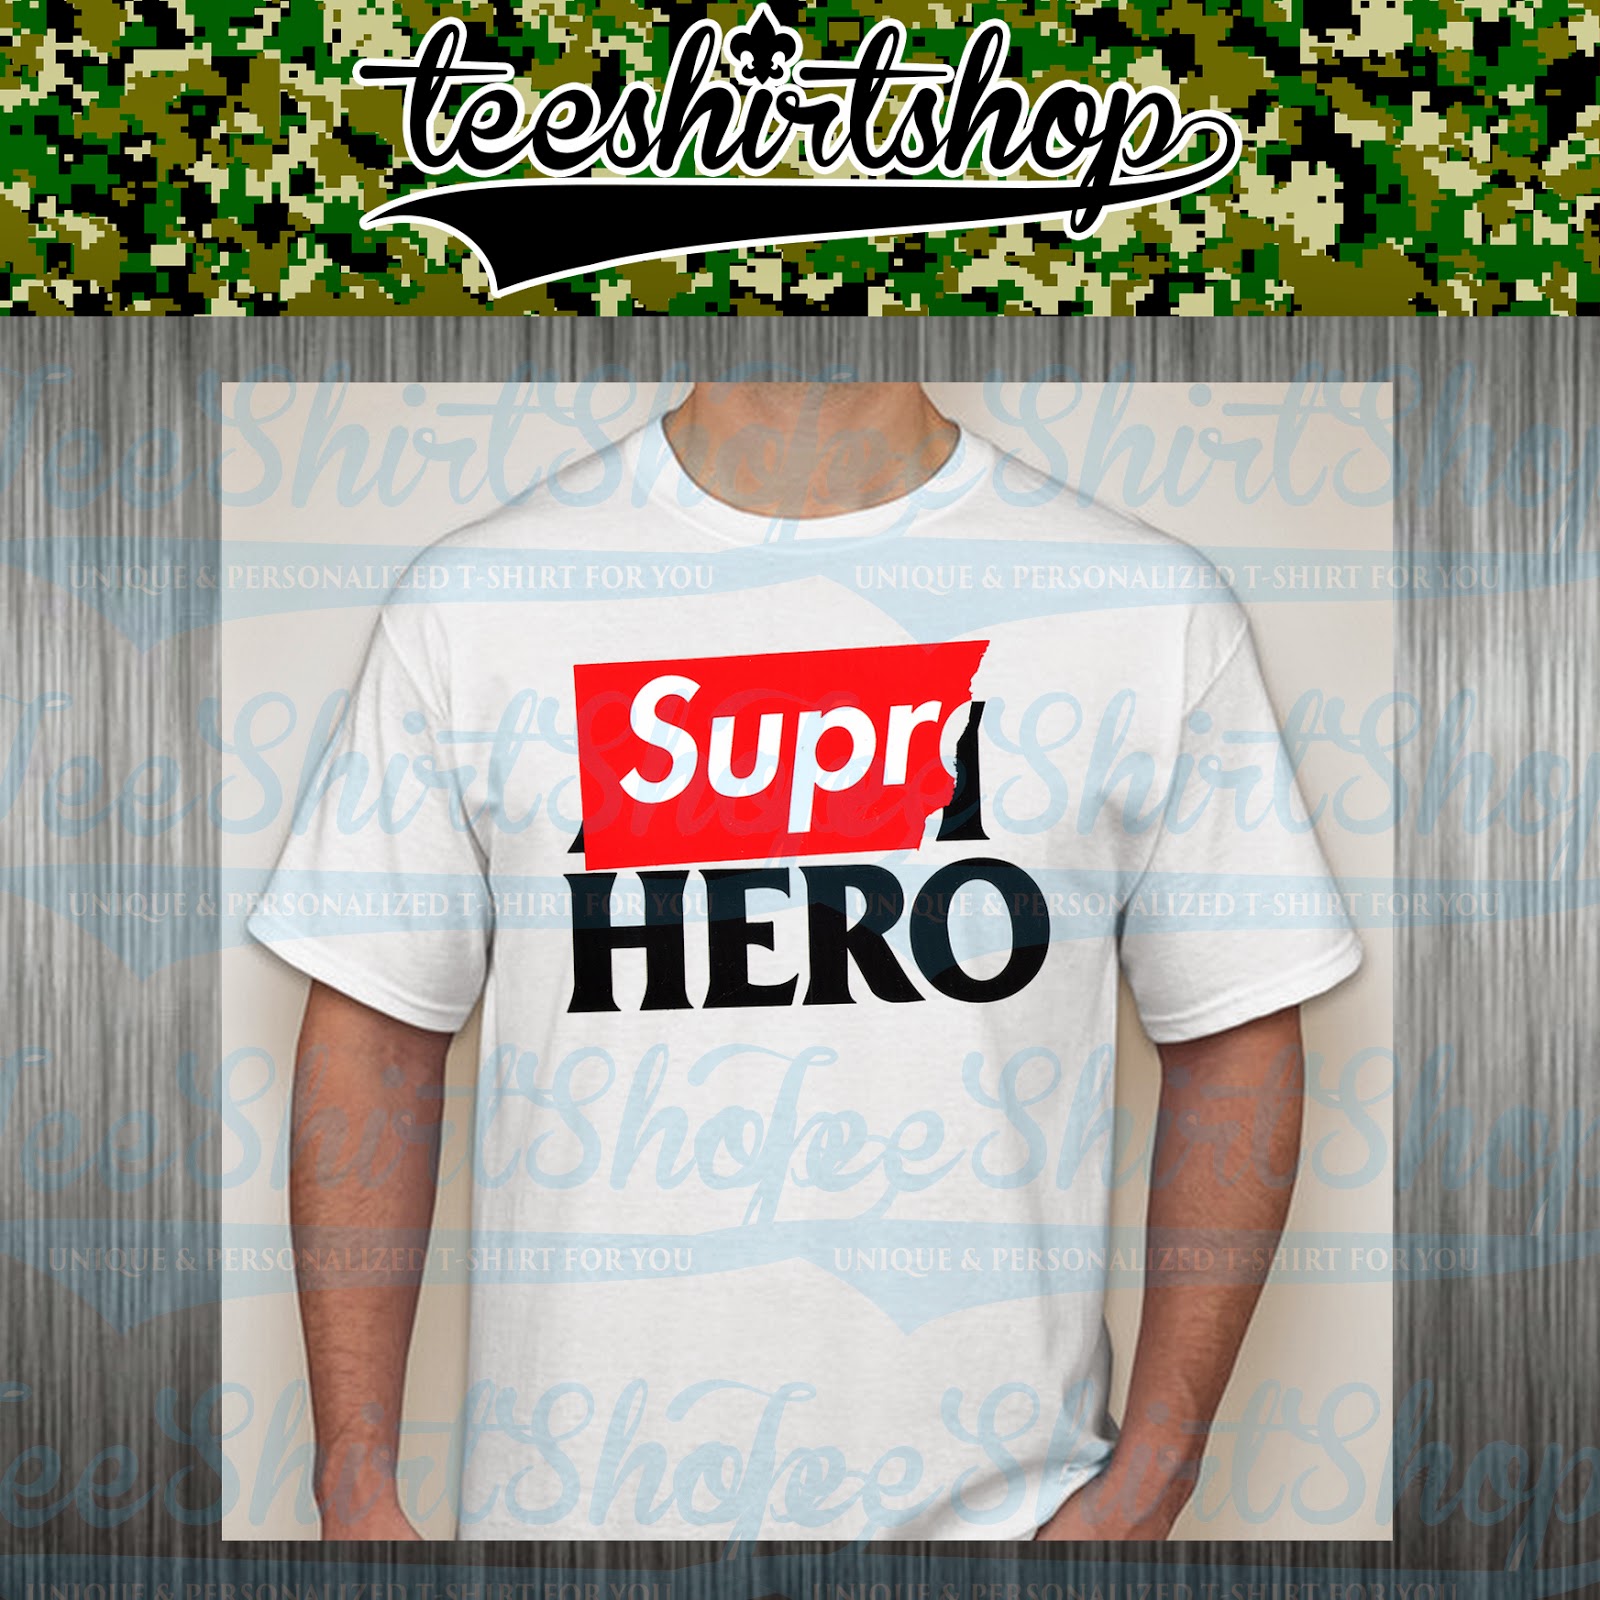 Tee Shirt Shop: Supreme X Antihero